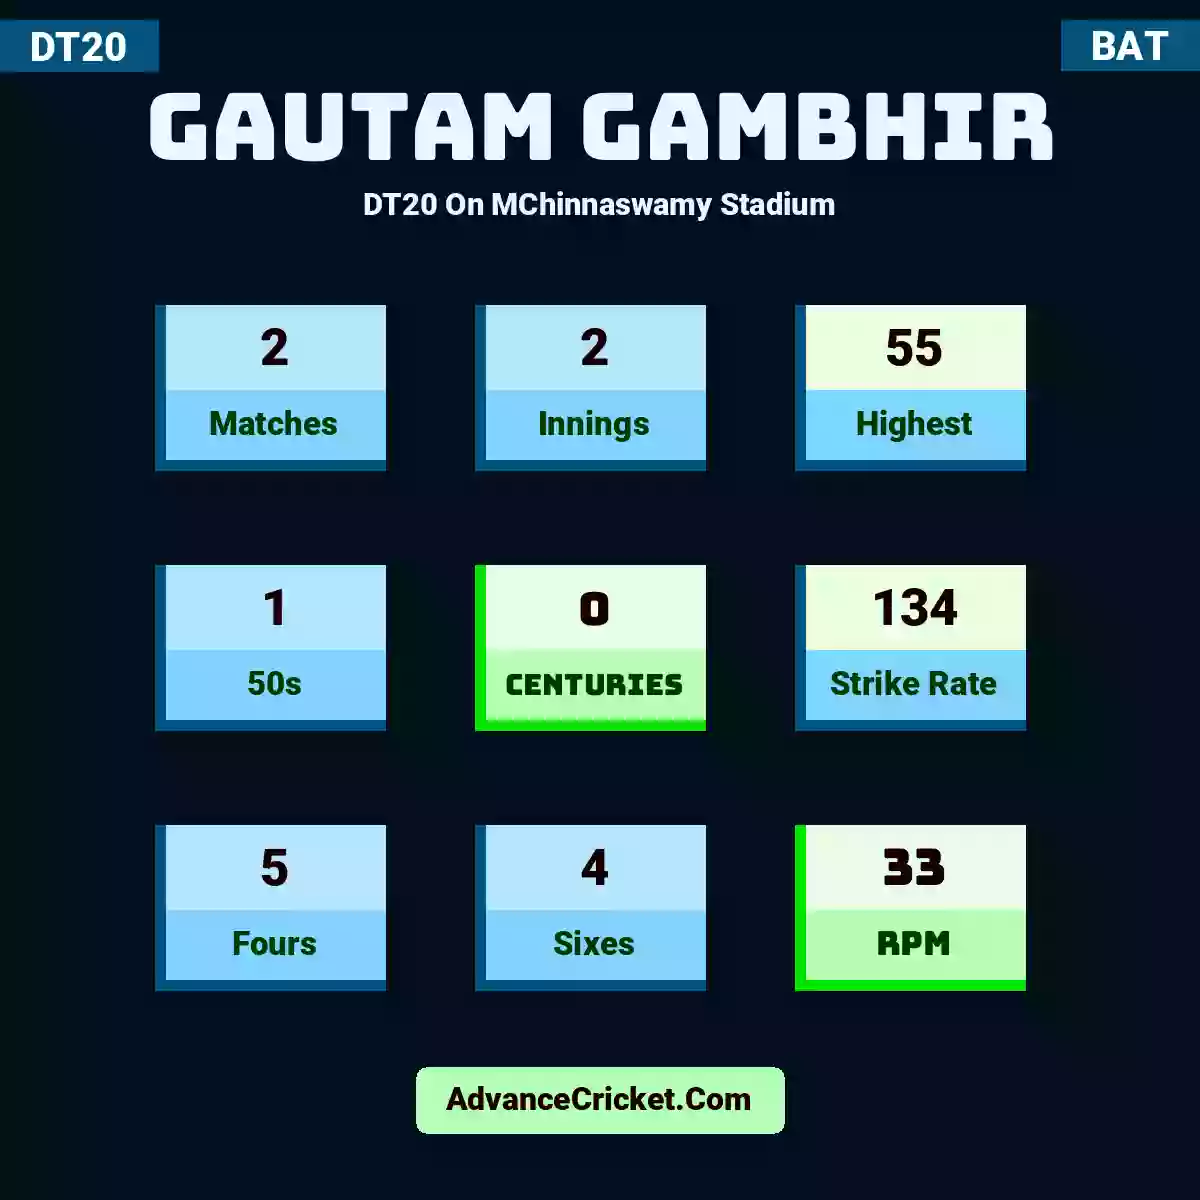 Gautam Gambhir DT20  On MChinnaswamy Stadium, Gautam Gambhir played 2 matches, scored 55 runs as highest, 1 half-centuries, and 0 centuries, with a strike rate of 134. G.Gambhir hit 5 fours and 4 sixes, with an RPM of 33.